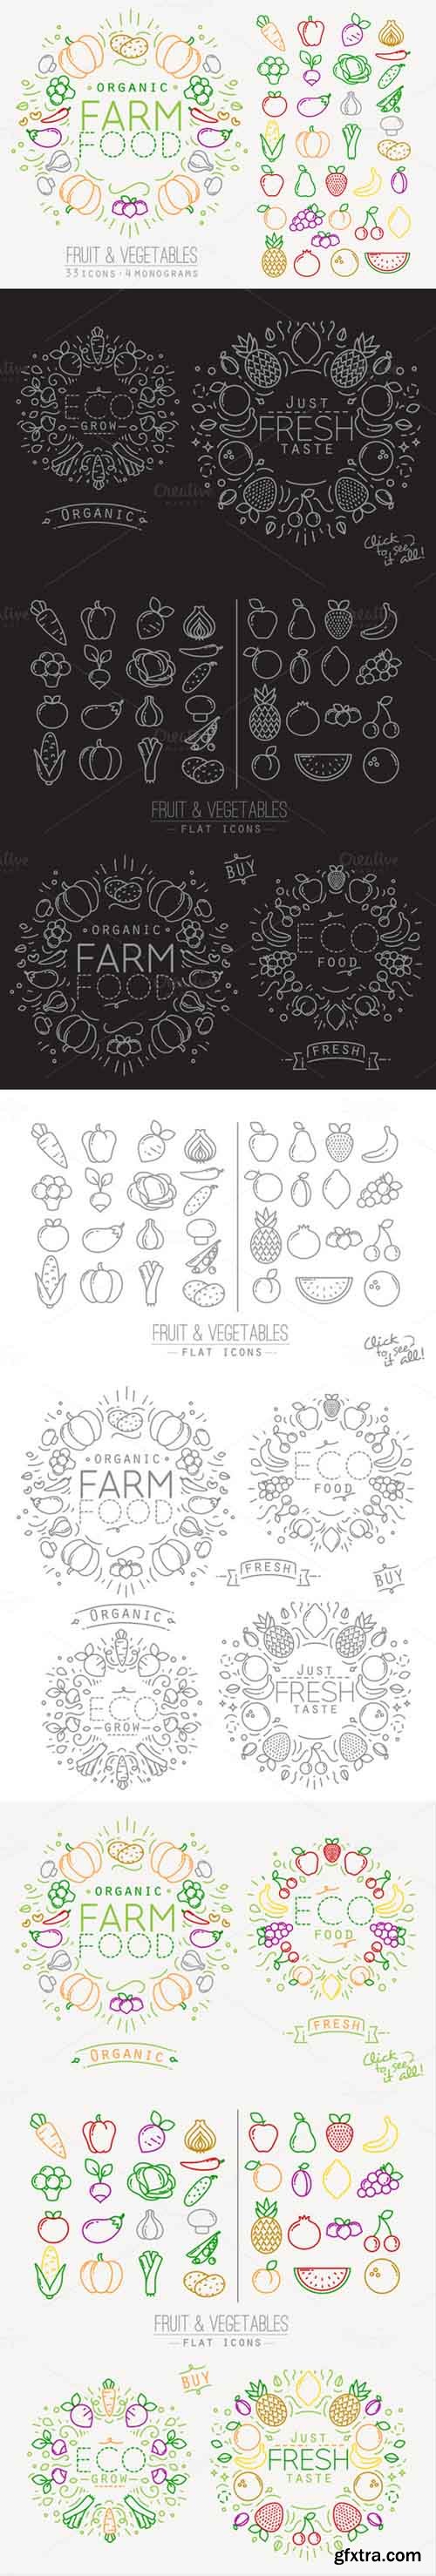 CM - Flat Fruits & Vegetables Icons 378480